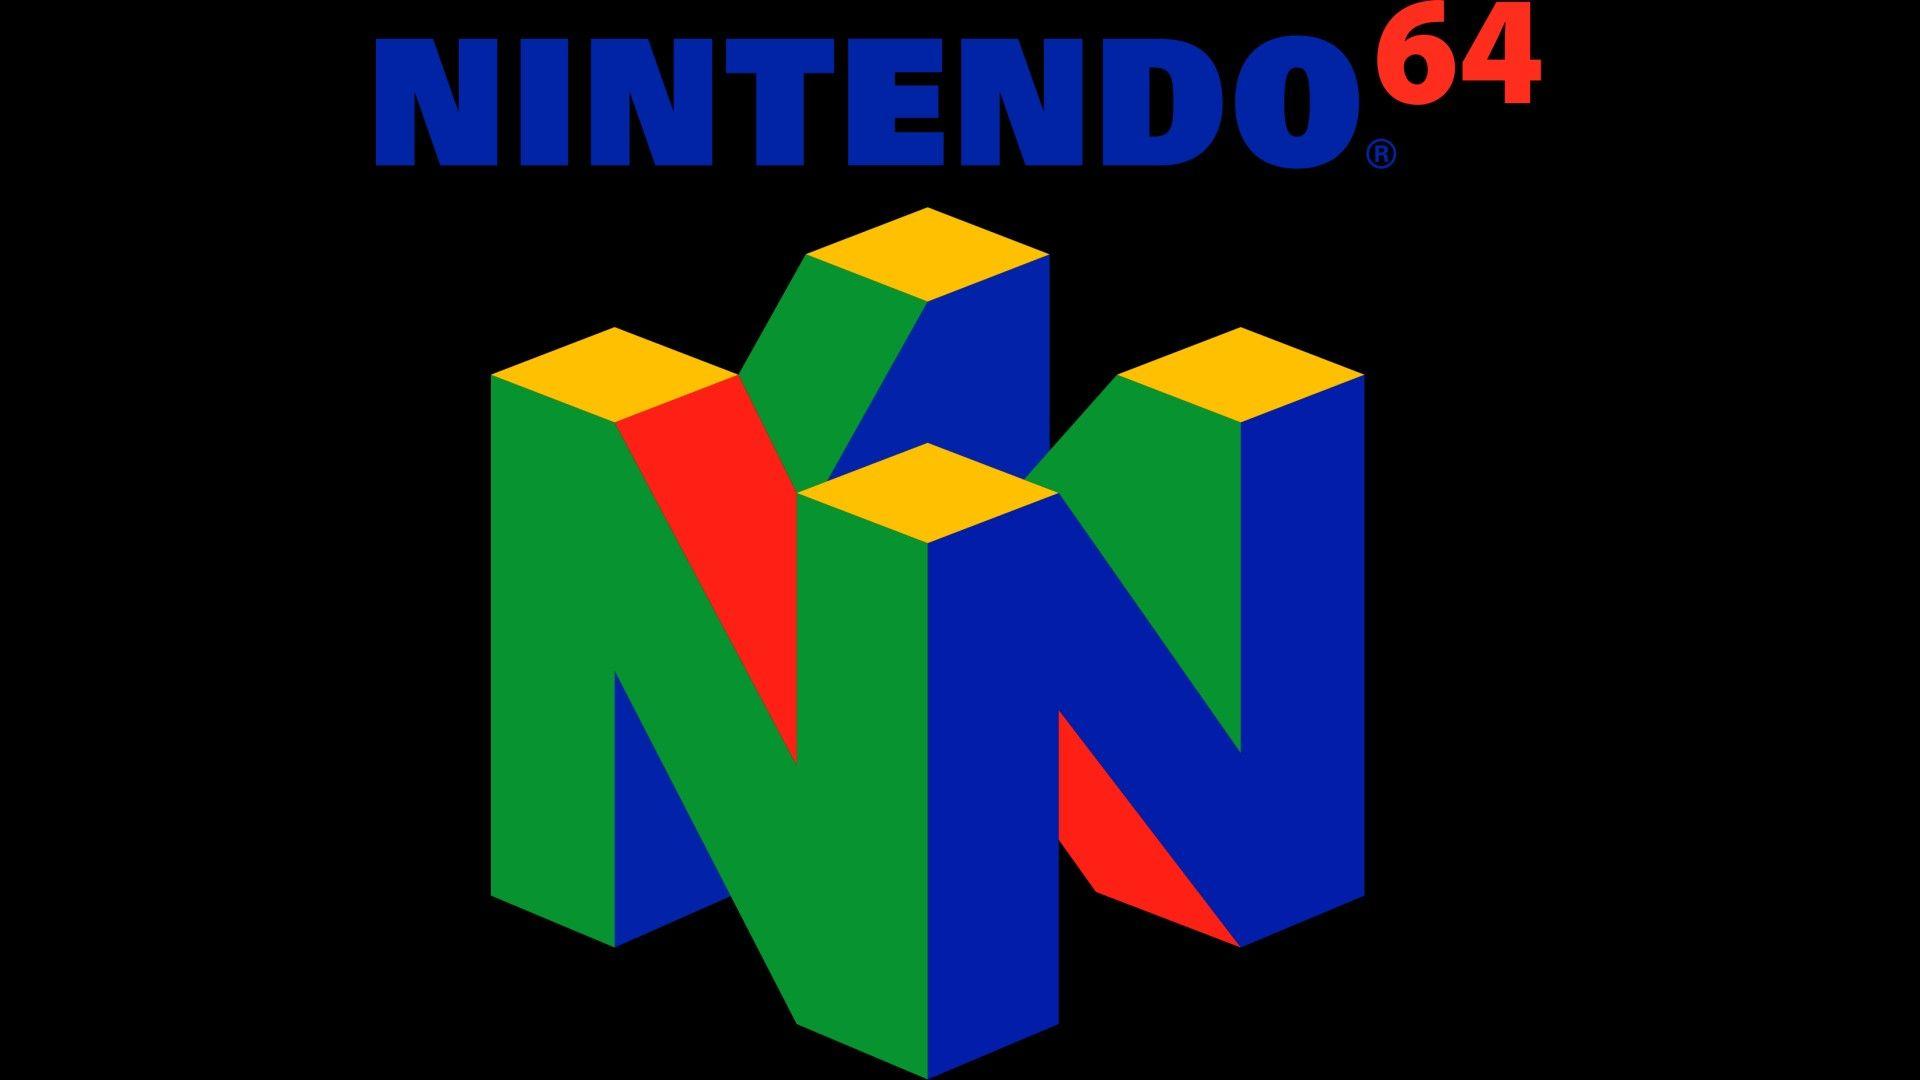 Nintendo 64 Wallpaper Free Nintendo 64 Background